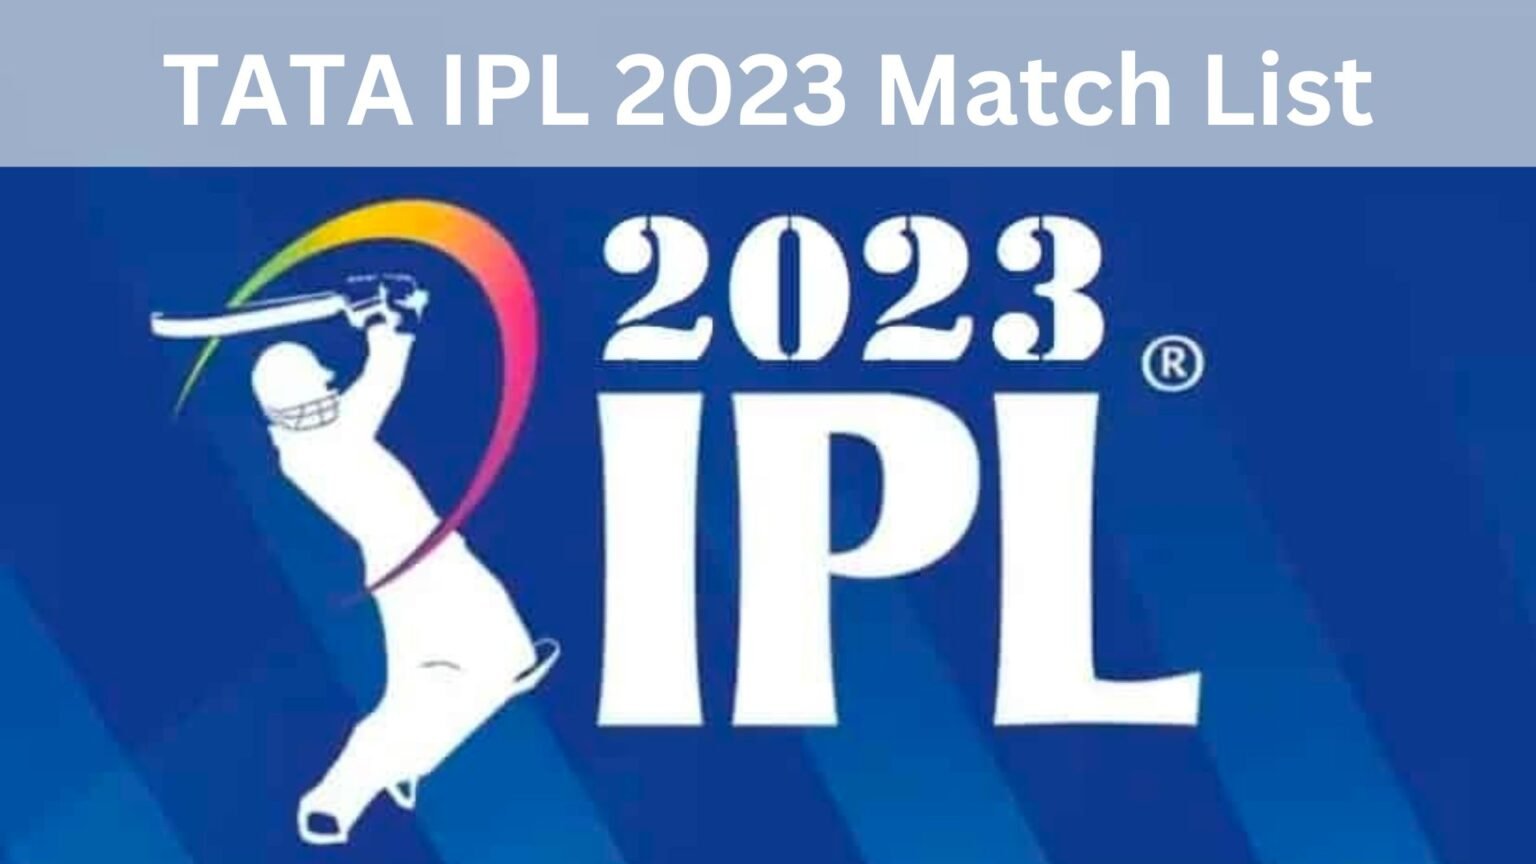 TATA IPL 2023 Match List MATCHES, VENUES, DATES